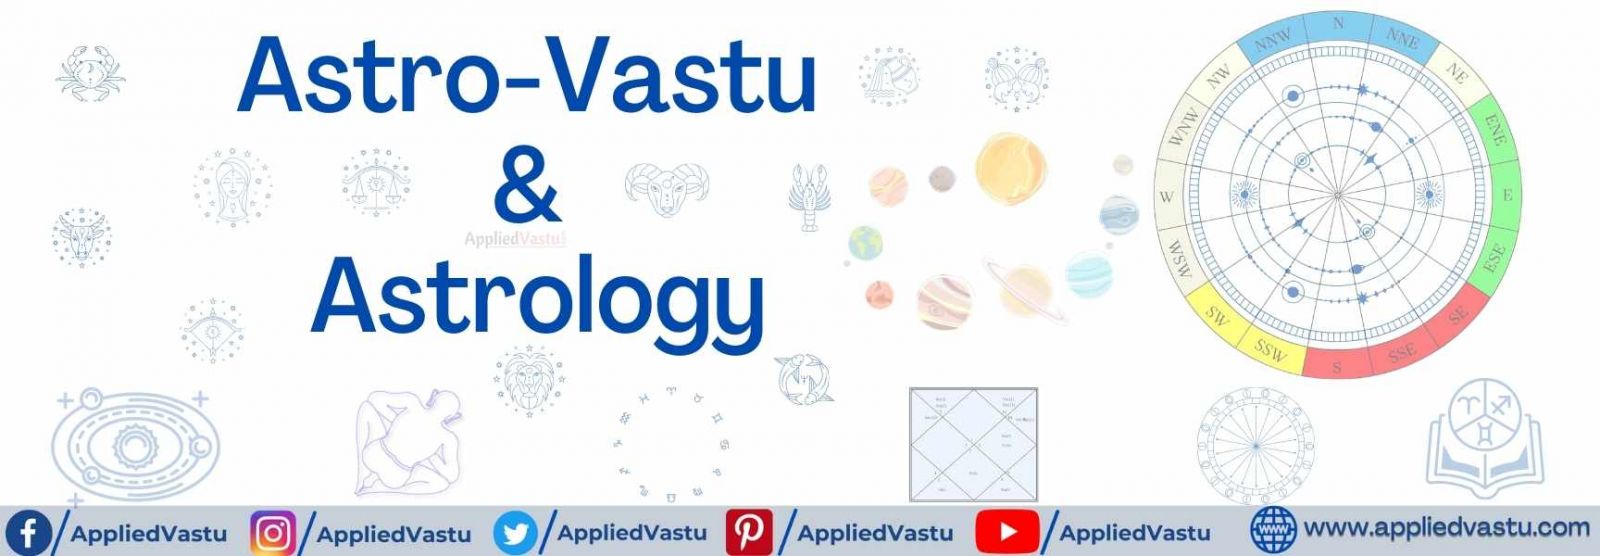 Astro Vastu - Astrology and Vastu Shastra